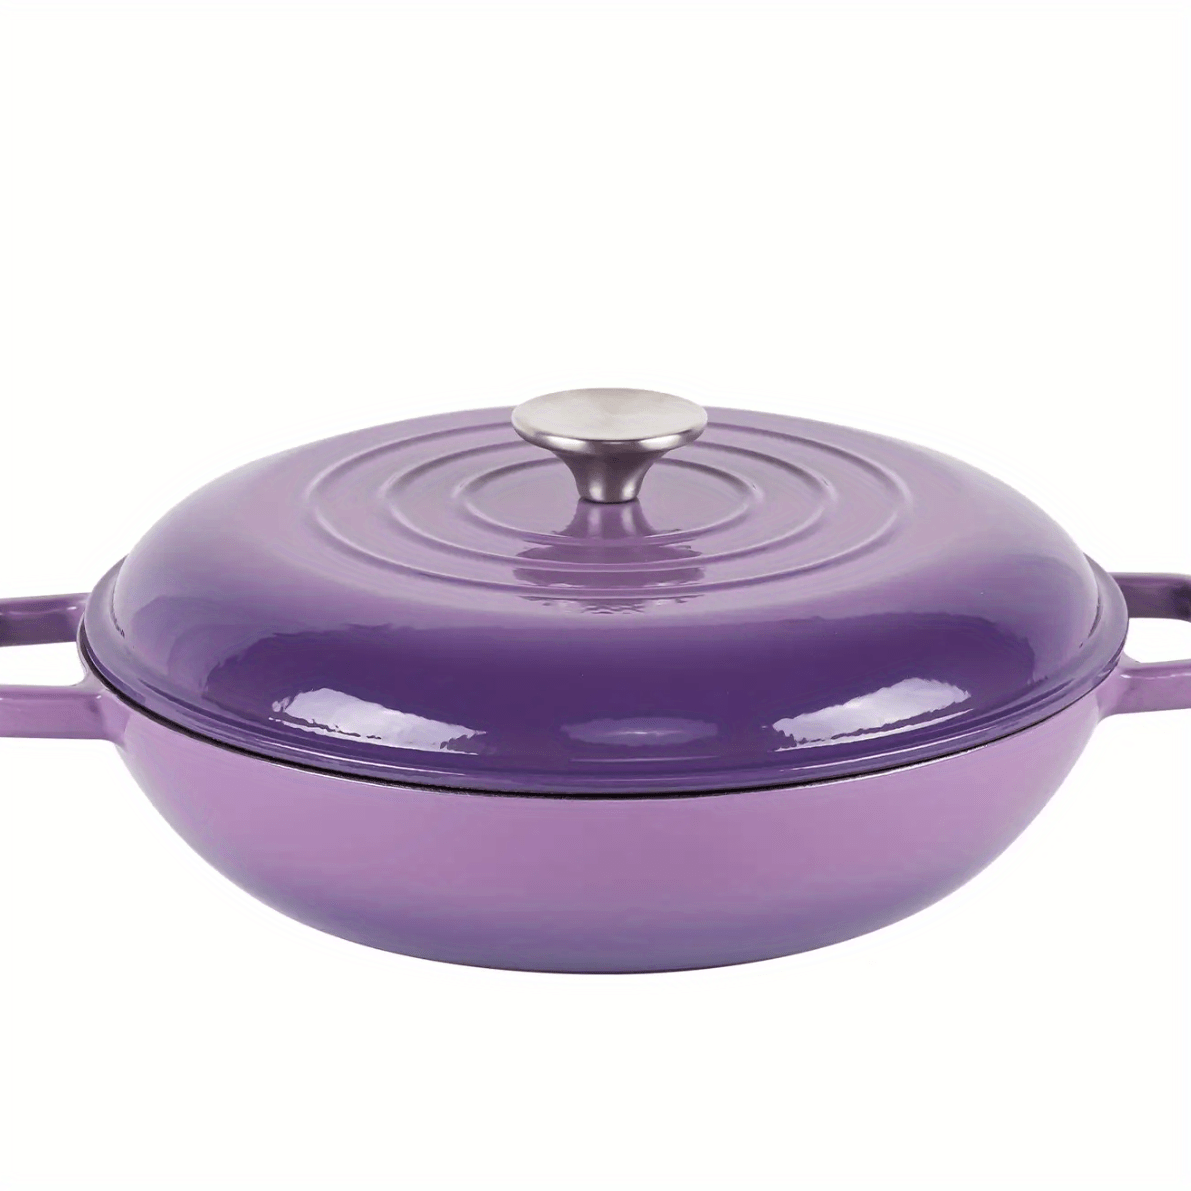 Cast Iron Bella Dutch Oven 2.75 Qt Purple enamel pot with lid stew/stock pot